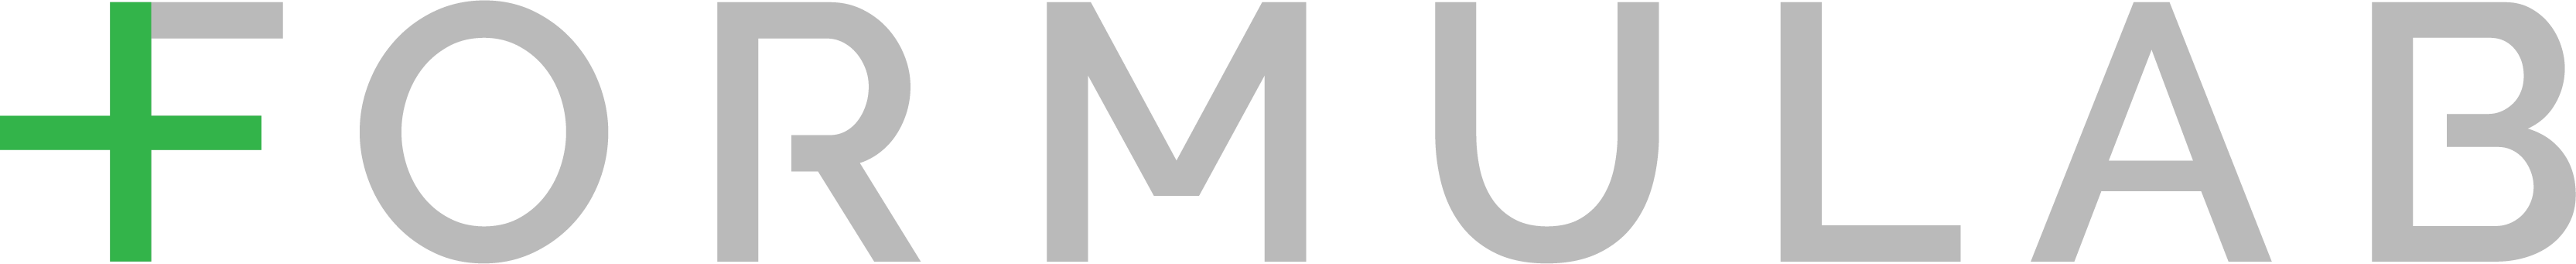 Formulab Logo